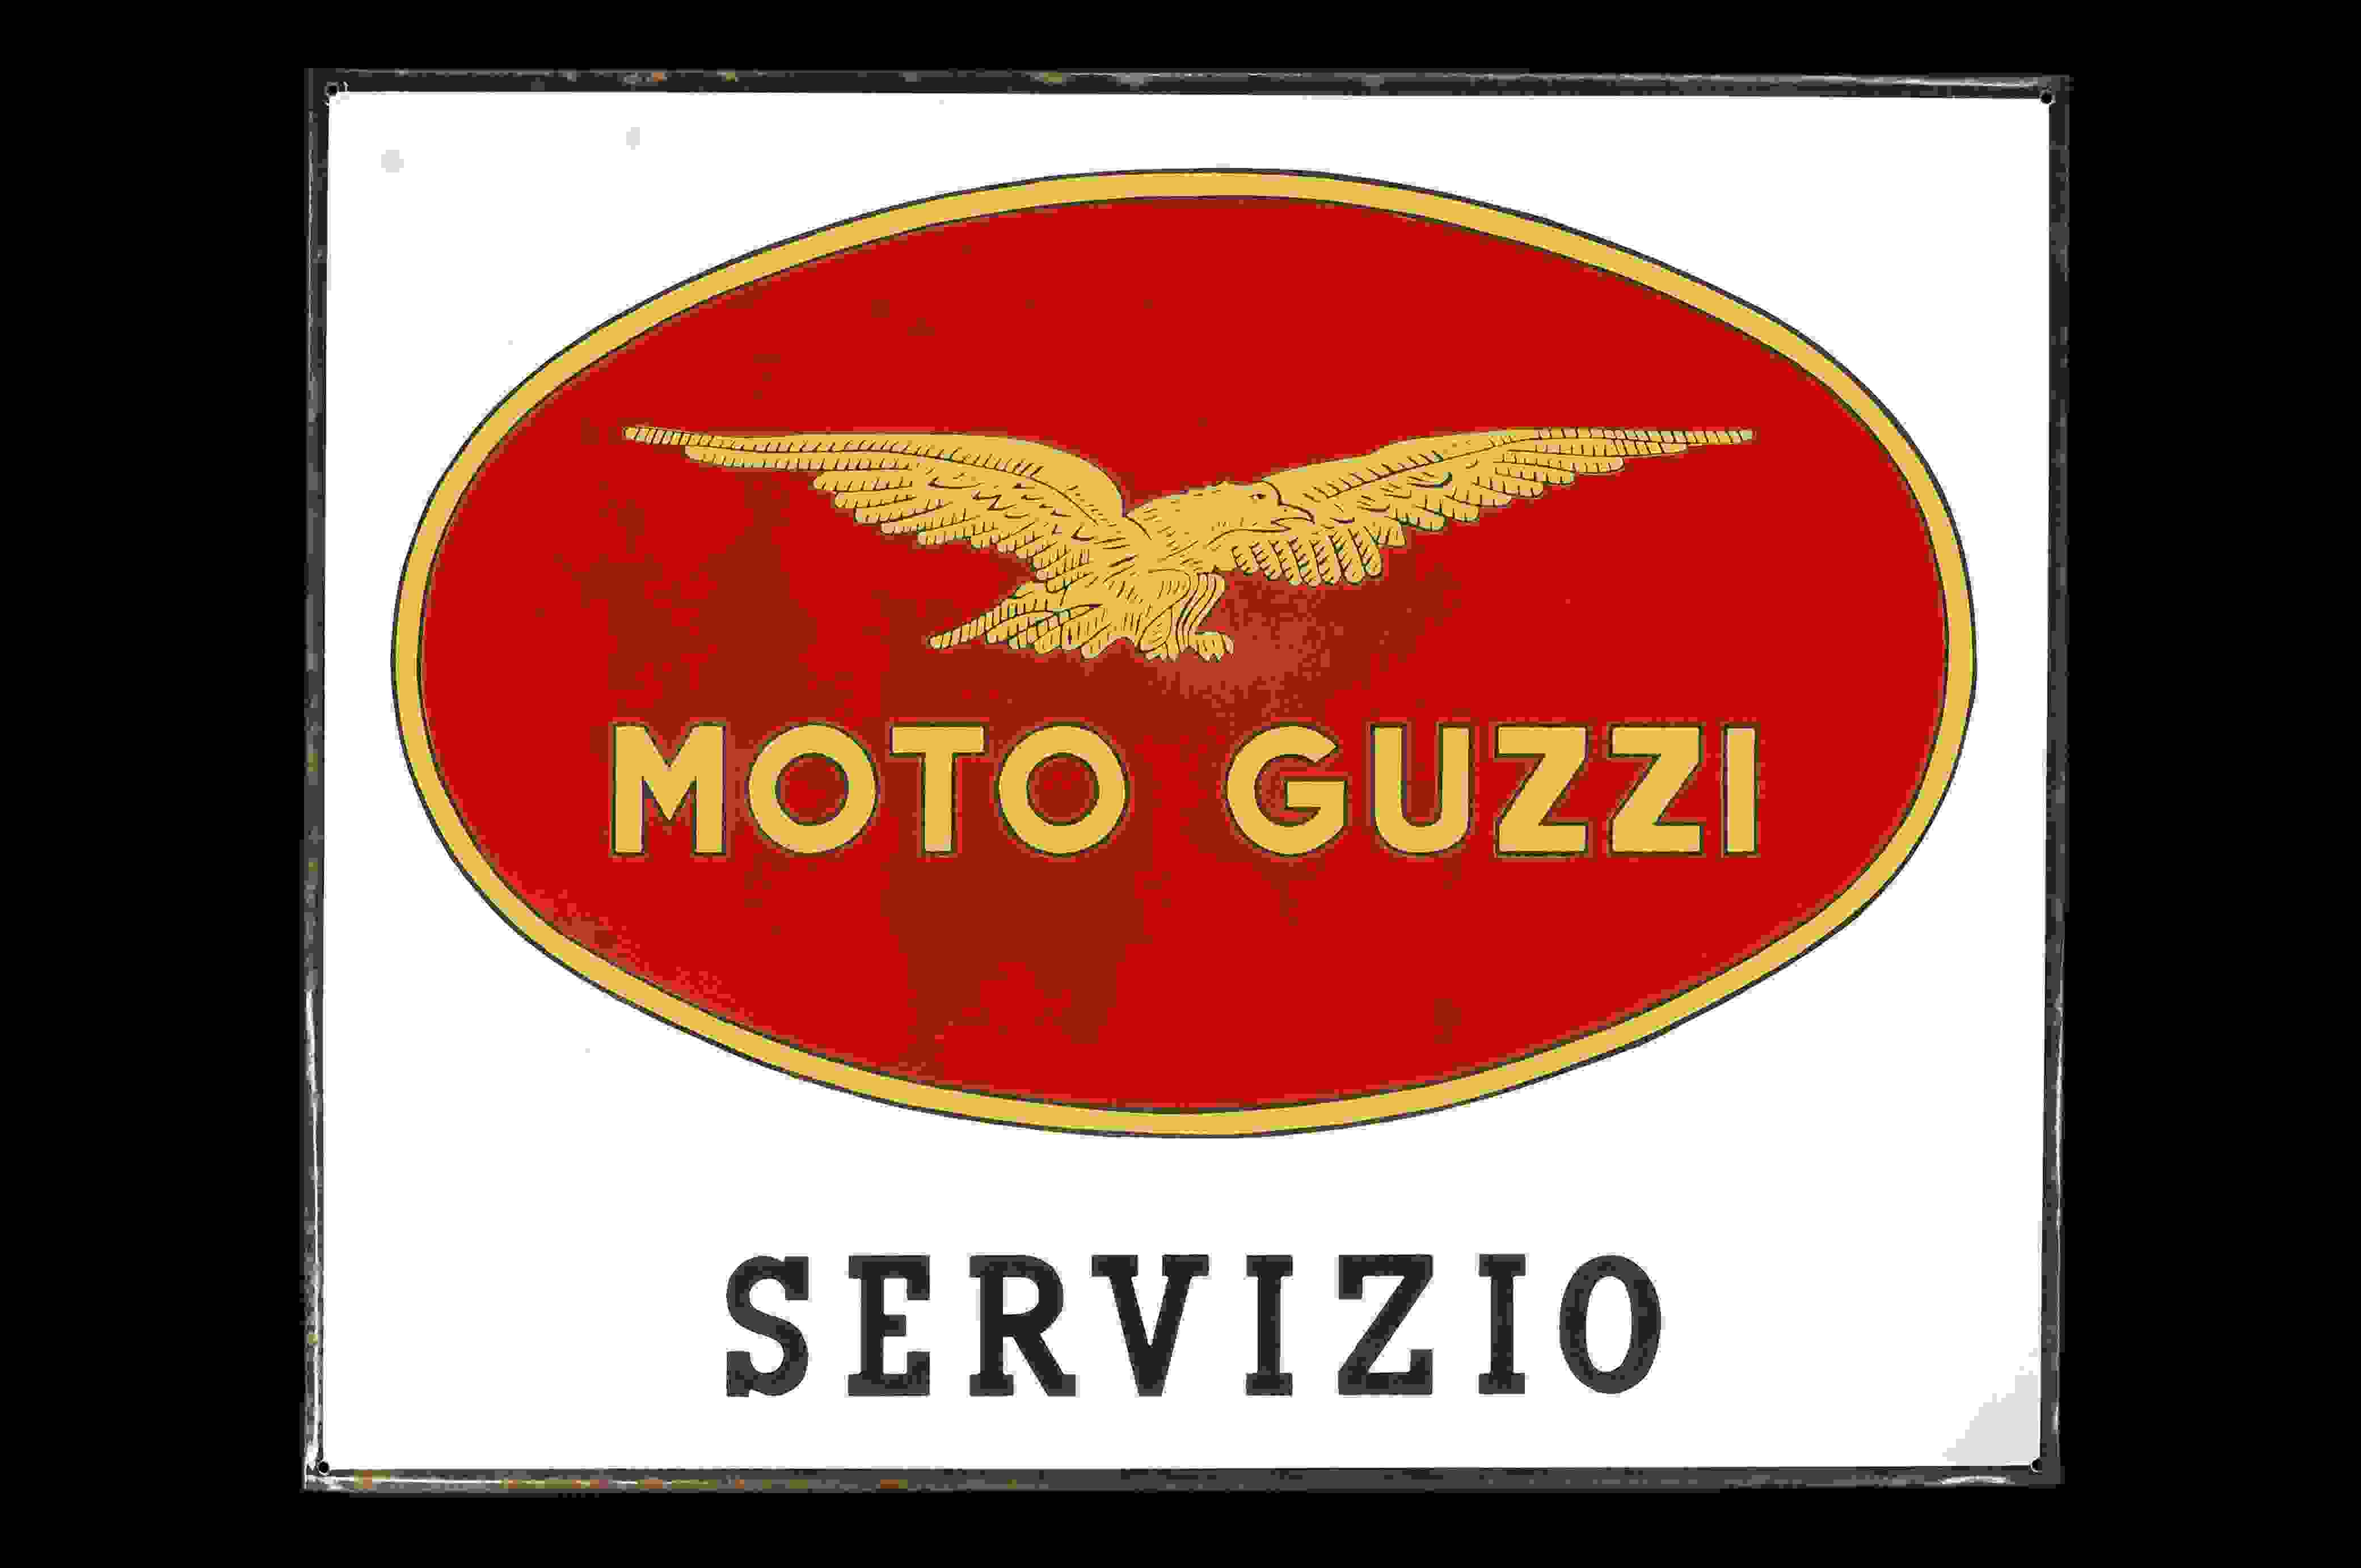 Moto Guzzi 